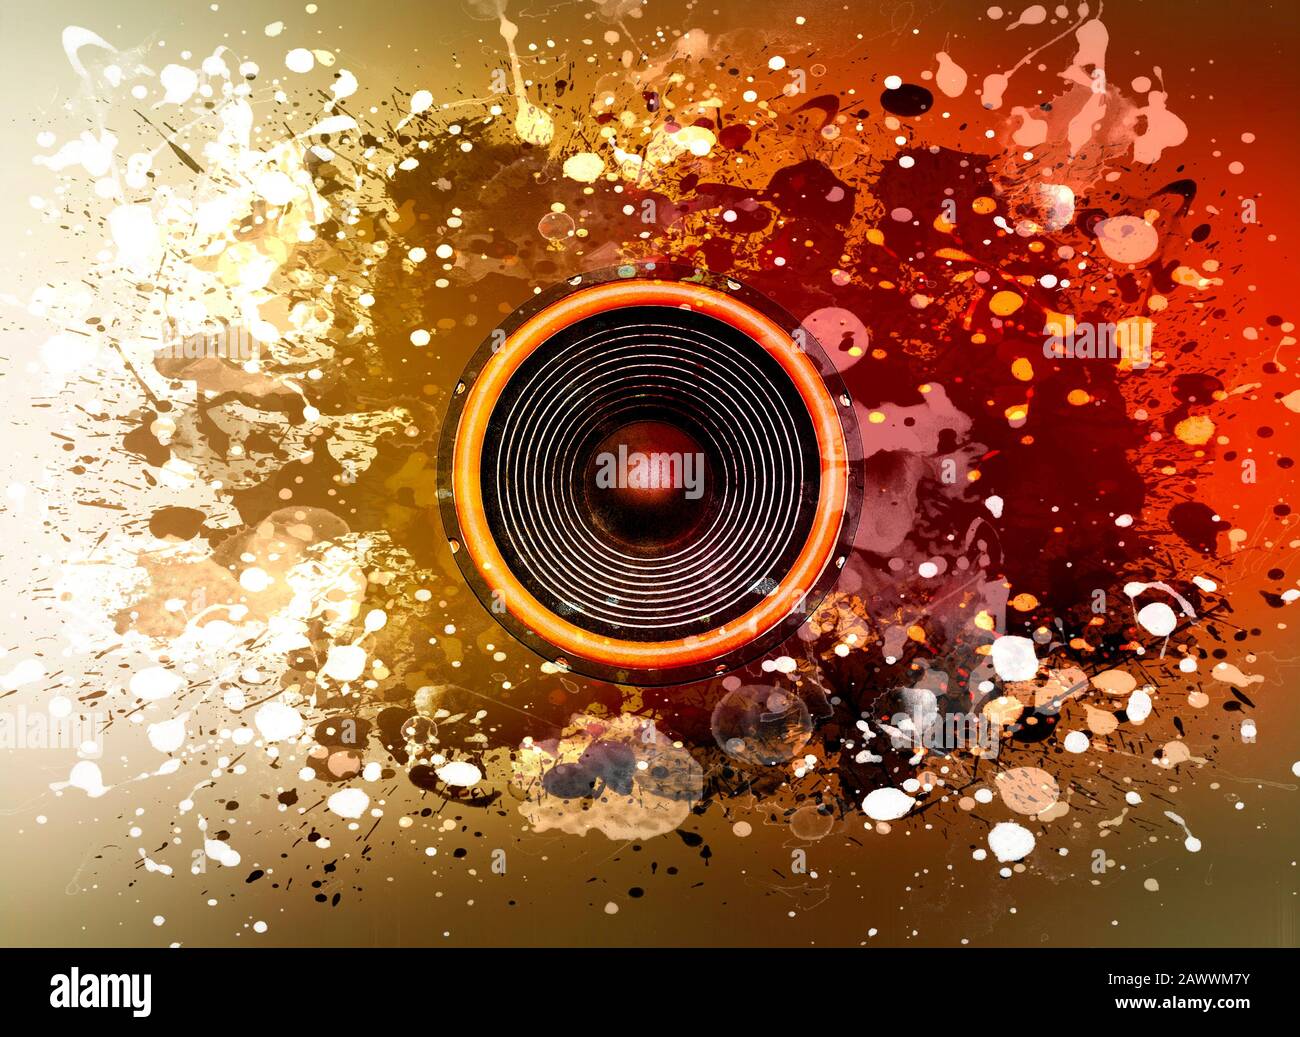 Orange audio speaker on a paint splattered background Stock Photo